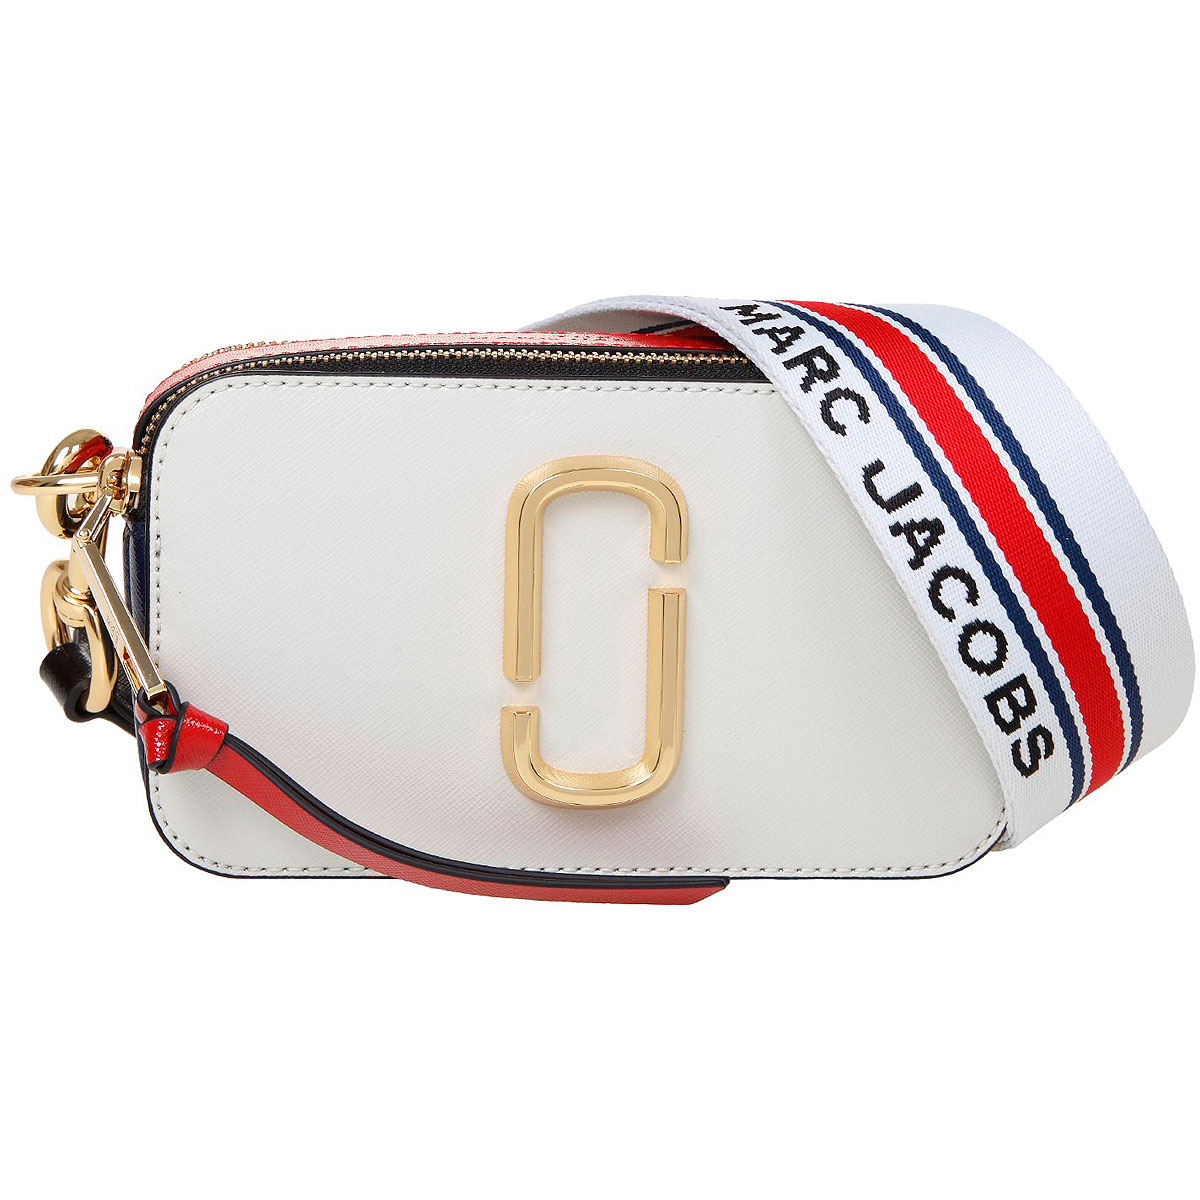 Handbags Marc Jacobs, Style code: m0012007-178-